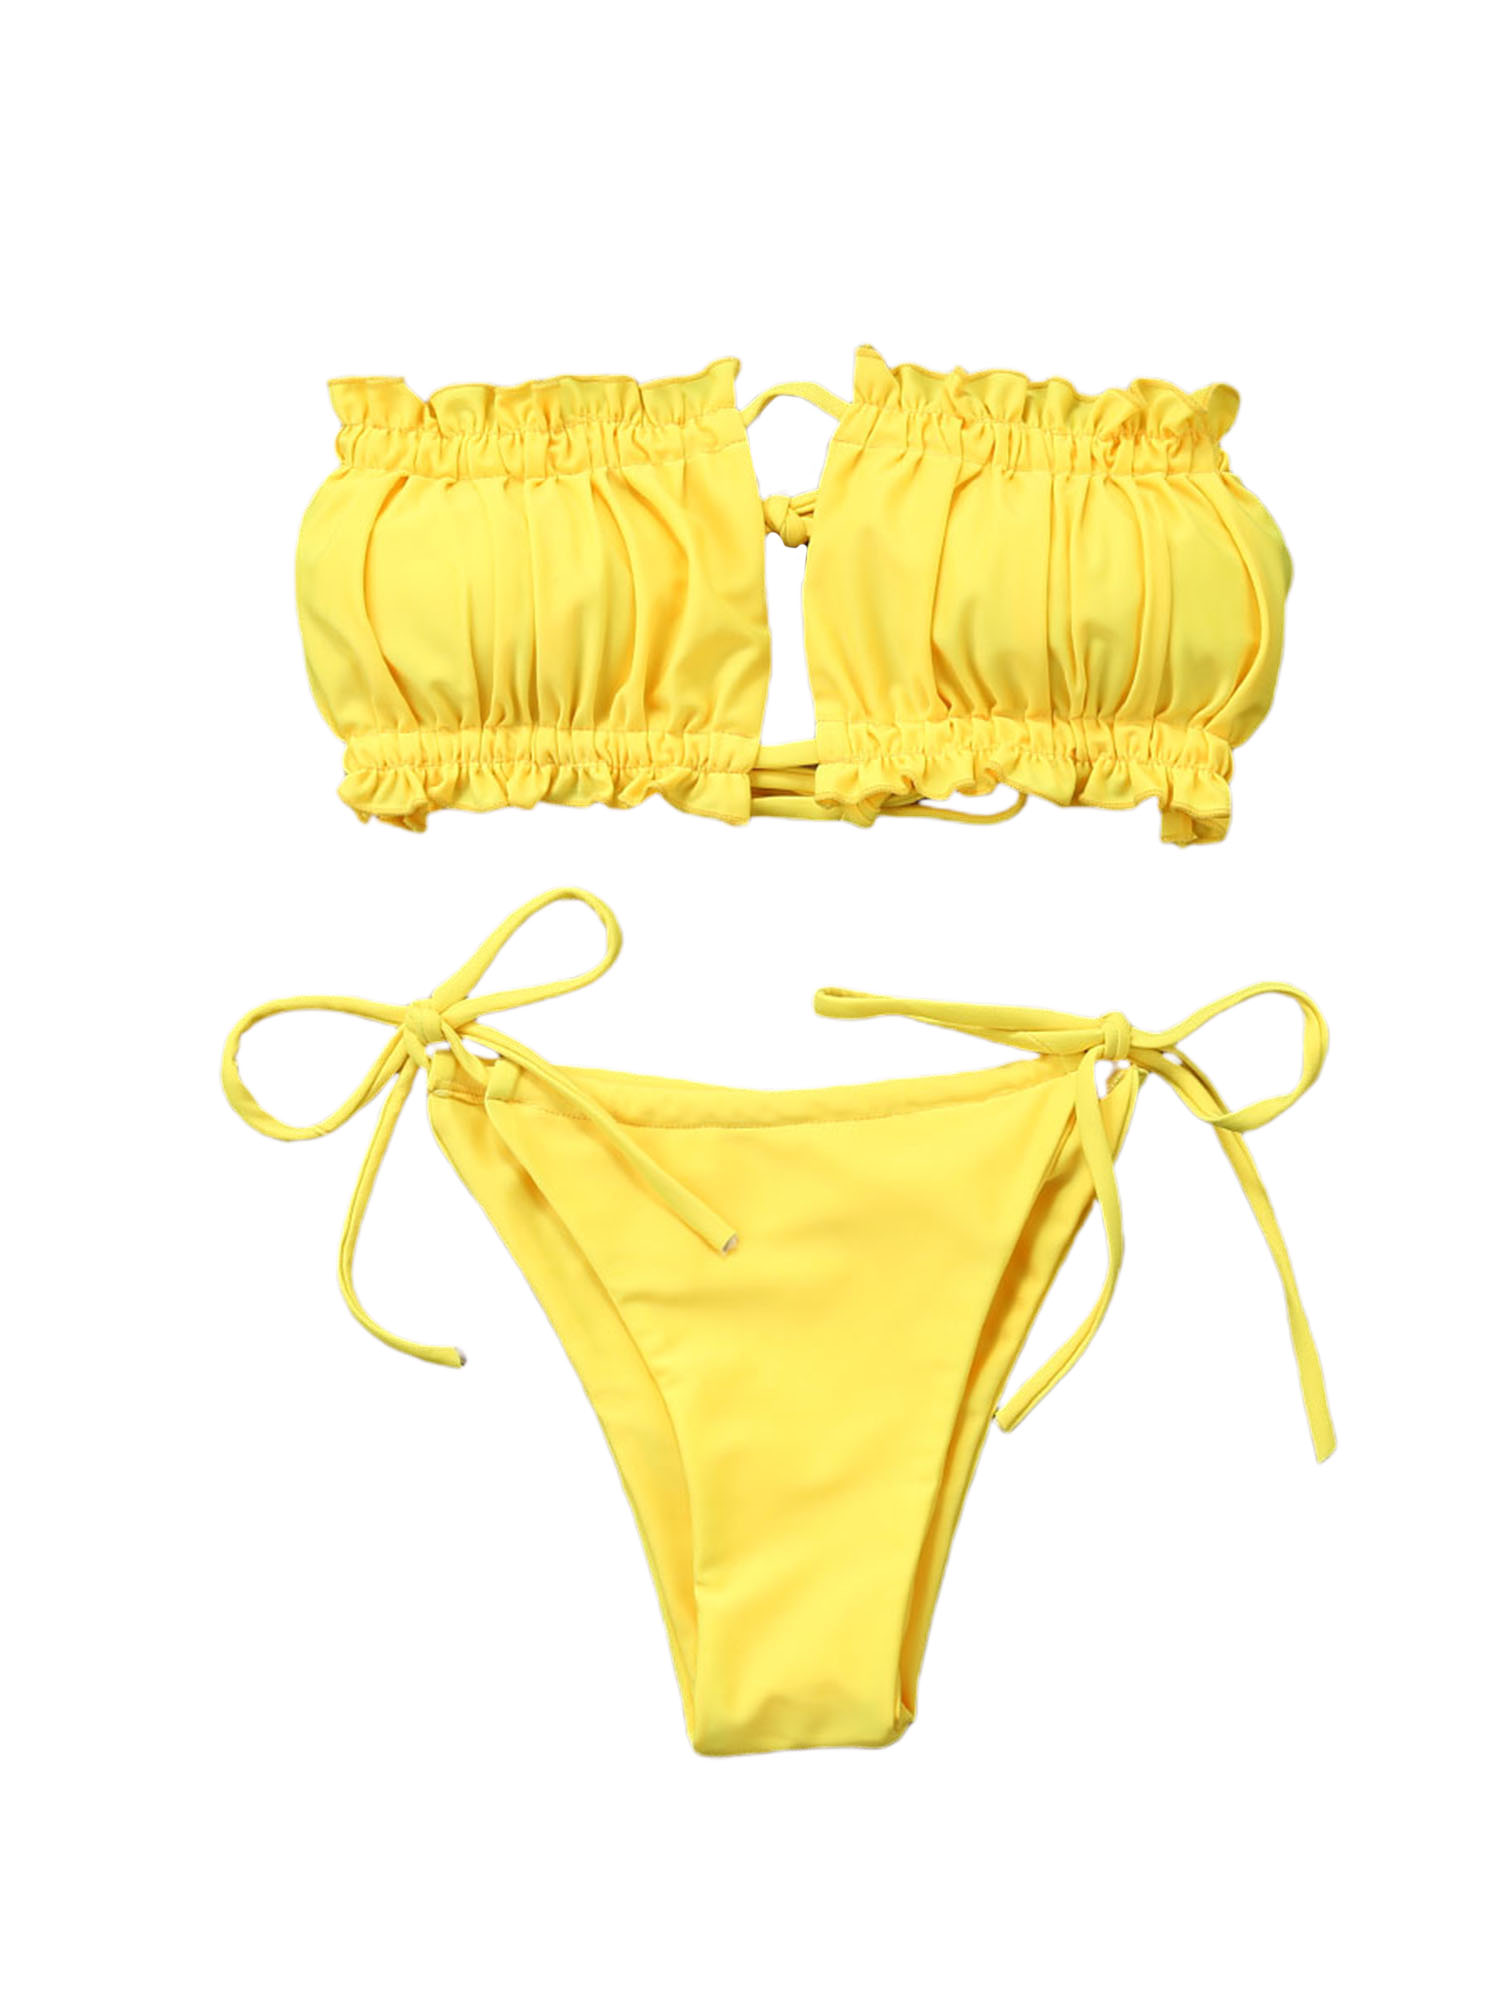 Eyicmarn Womens Girls Strapless Ribbed Tie Back Ruffle Cutout Bandeau Bikini Set Swimsuit - image 2 of 6